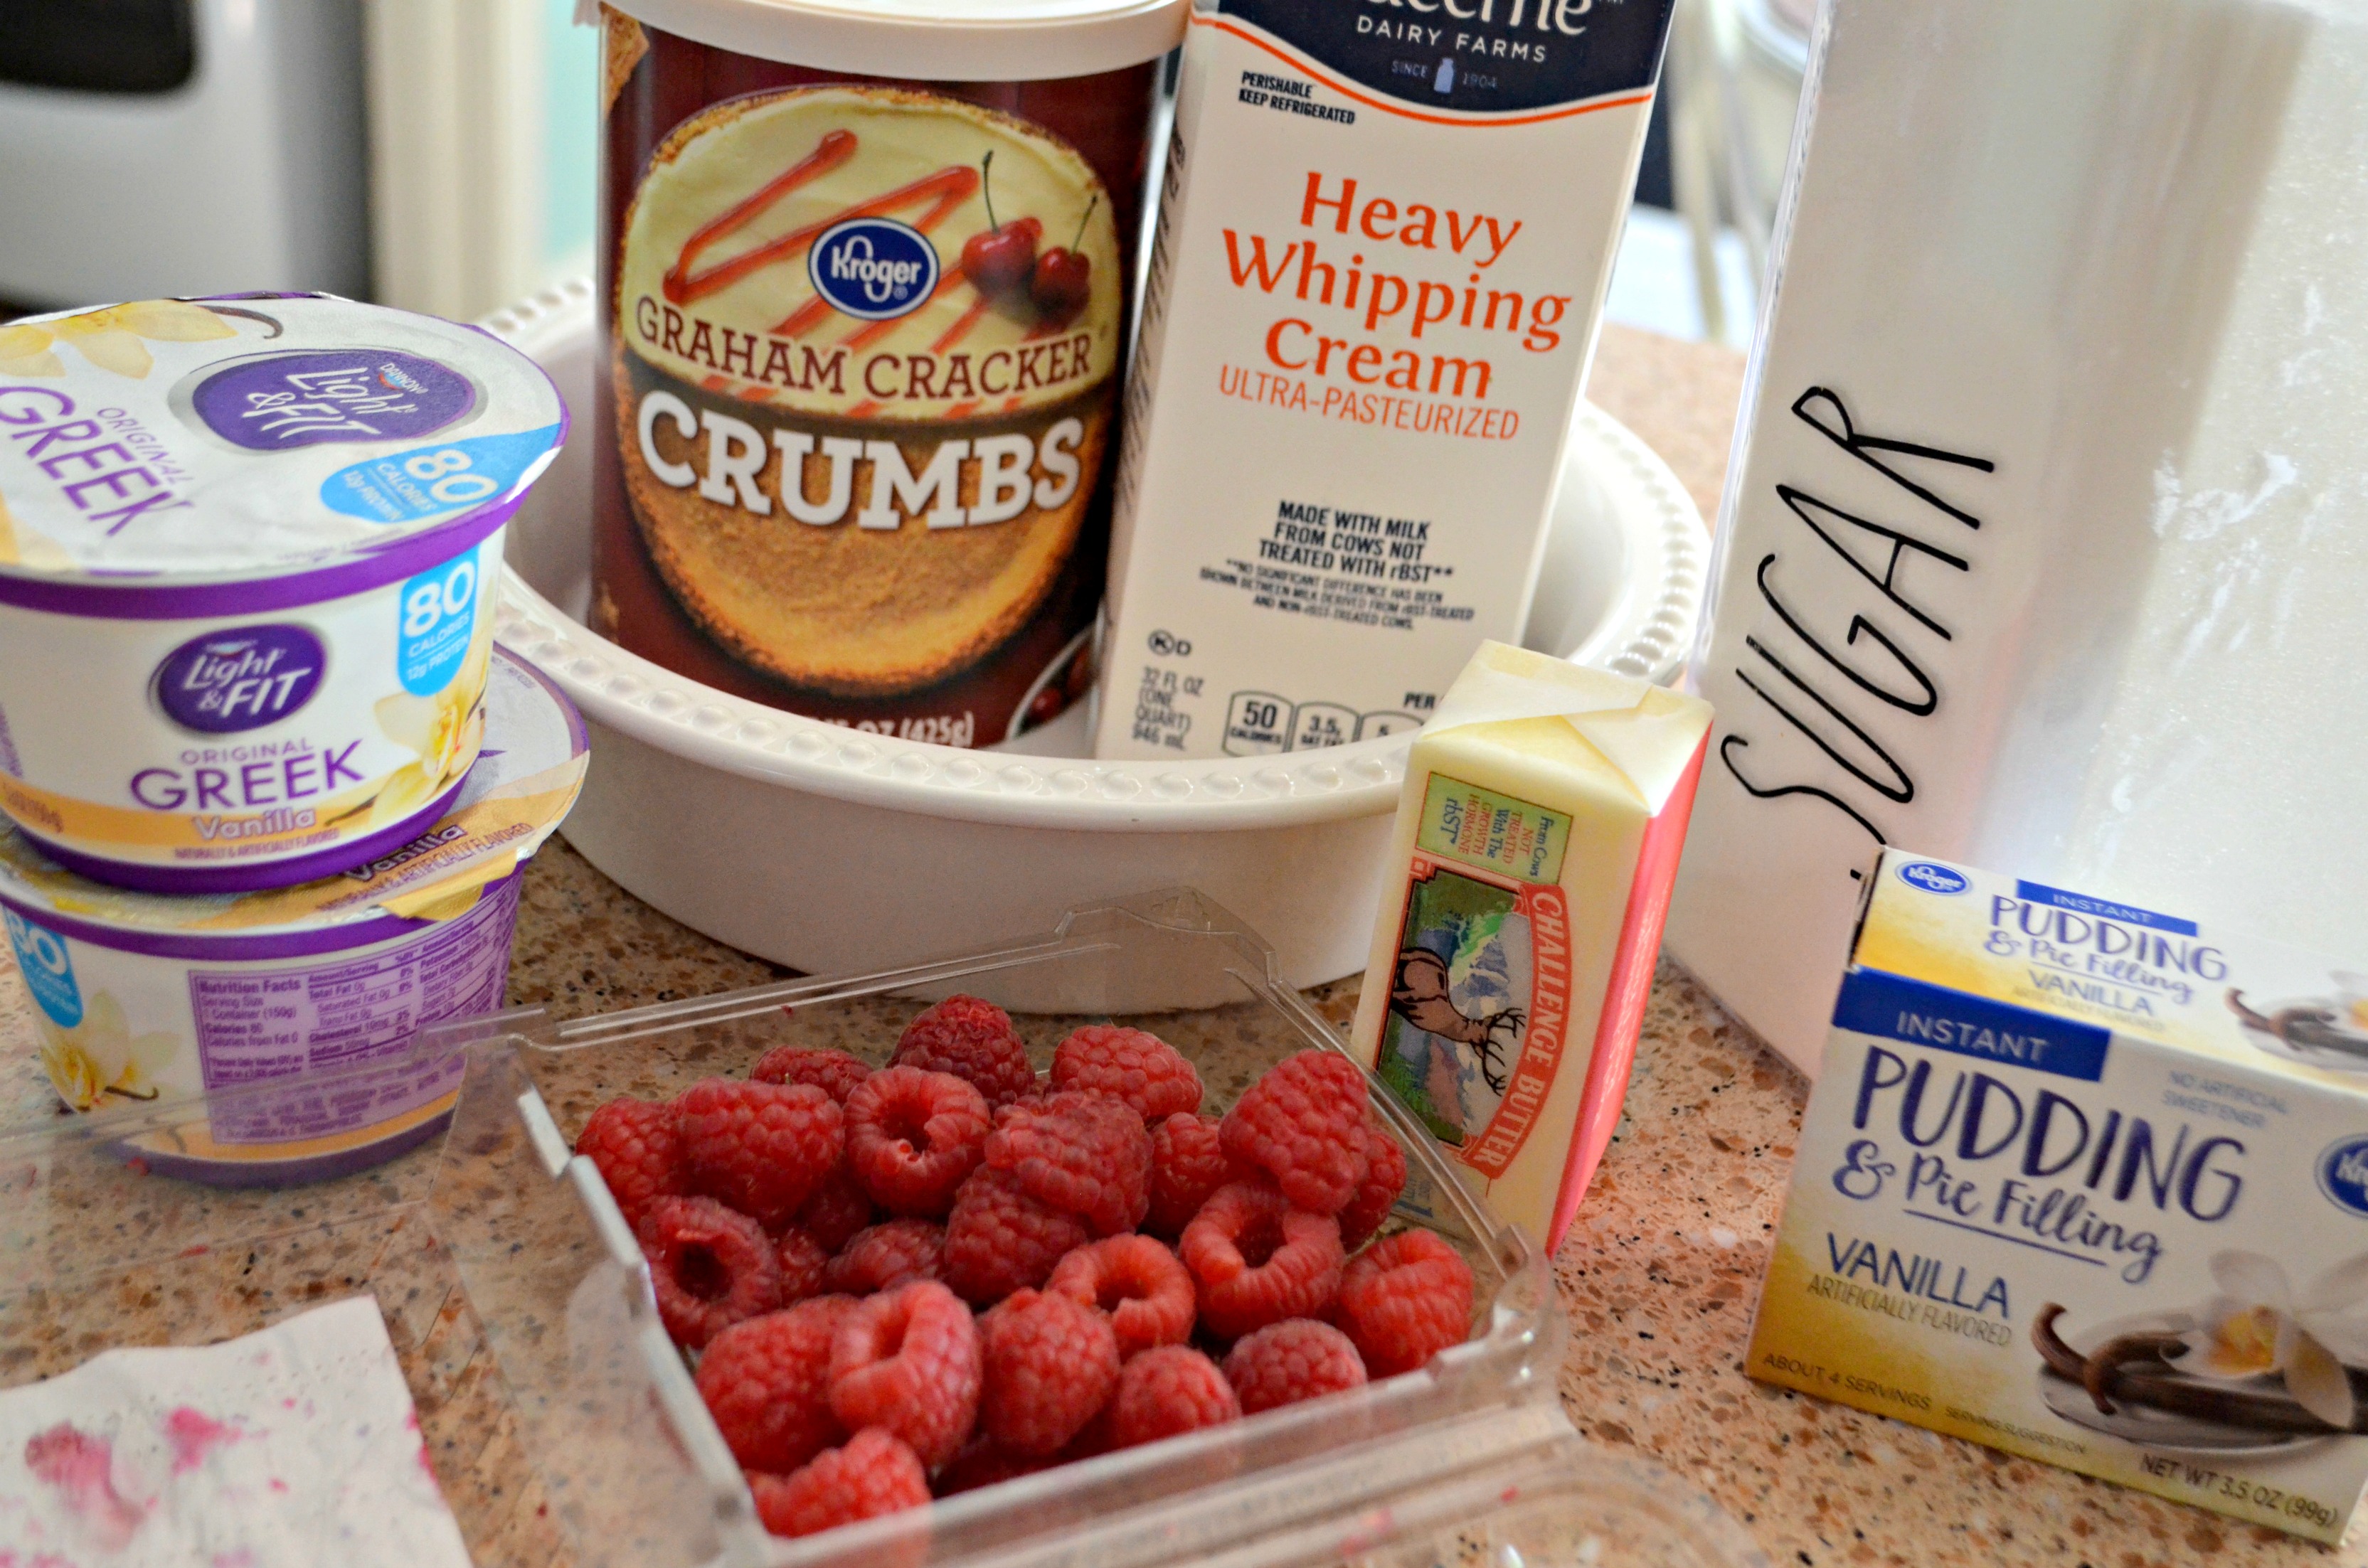 Easy Raspberry Cream Pie – The ingredients on the counter